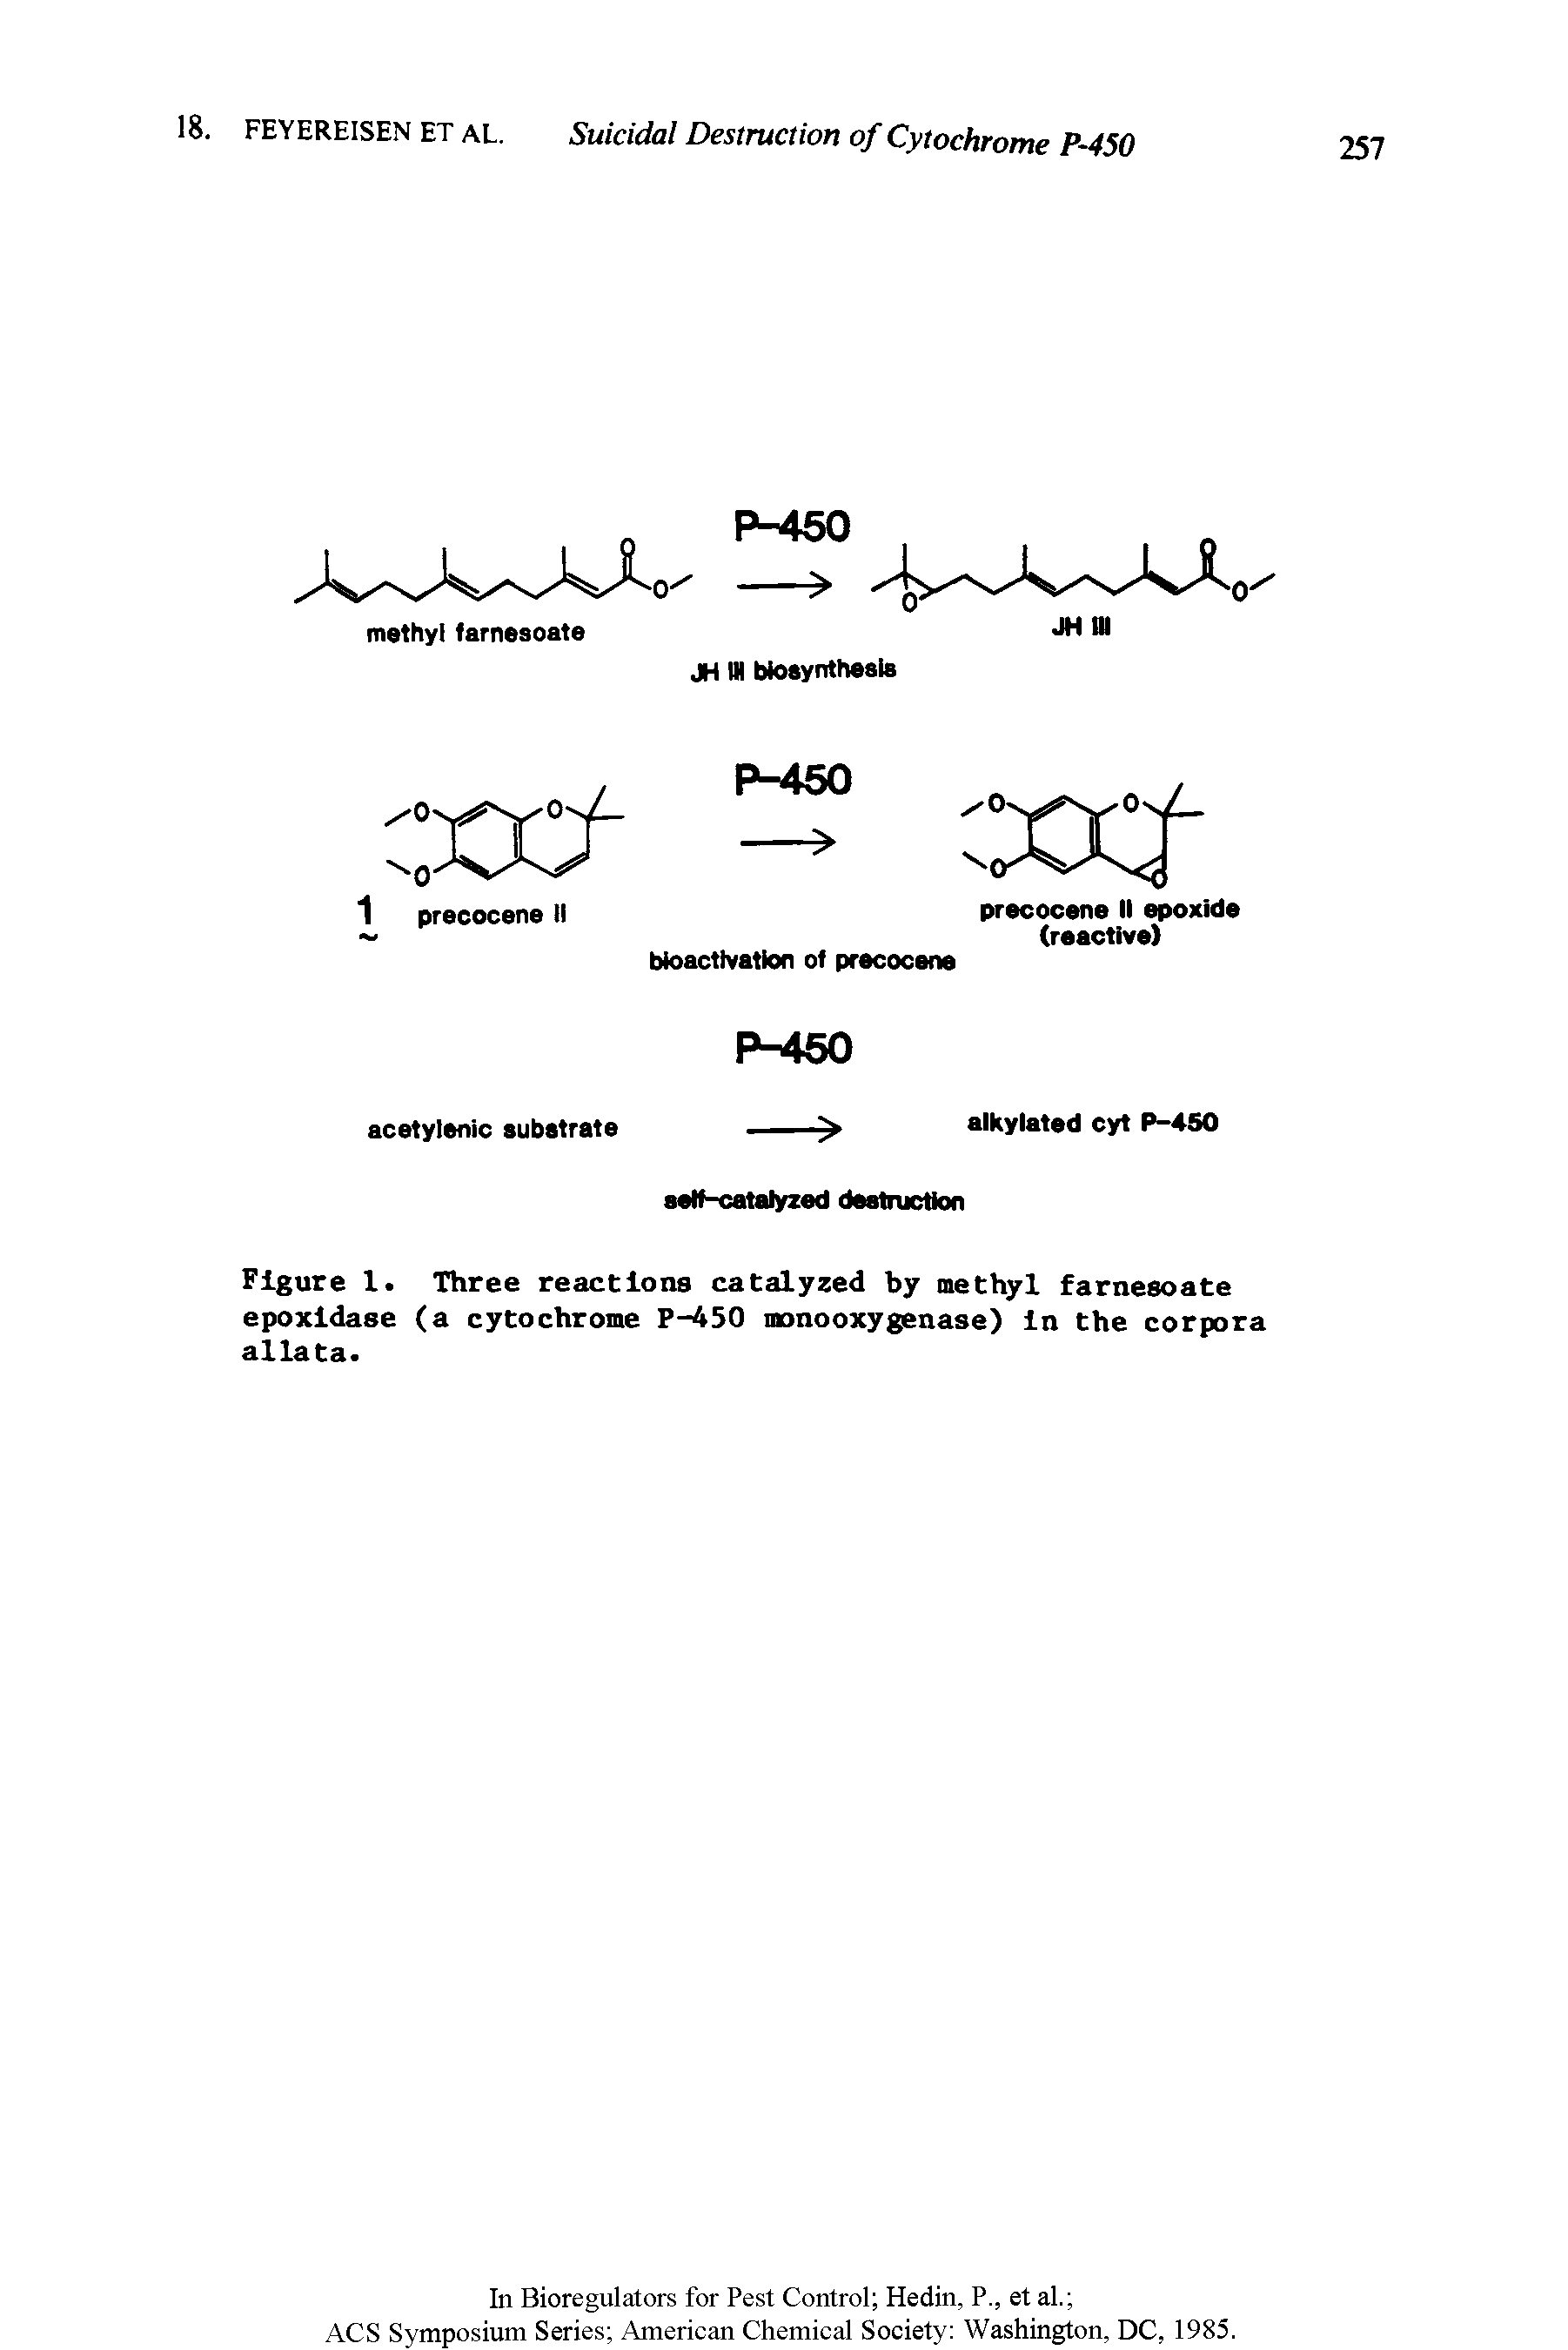 Figure 1. Three reactions catalyzed by methyl farnesoate epoxidase (a cytochrome P-450 monooxygenase) in the corpora allata.